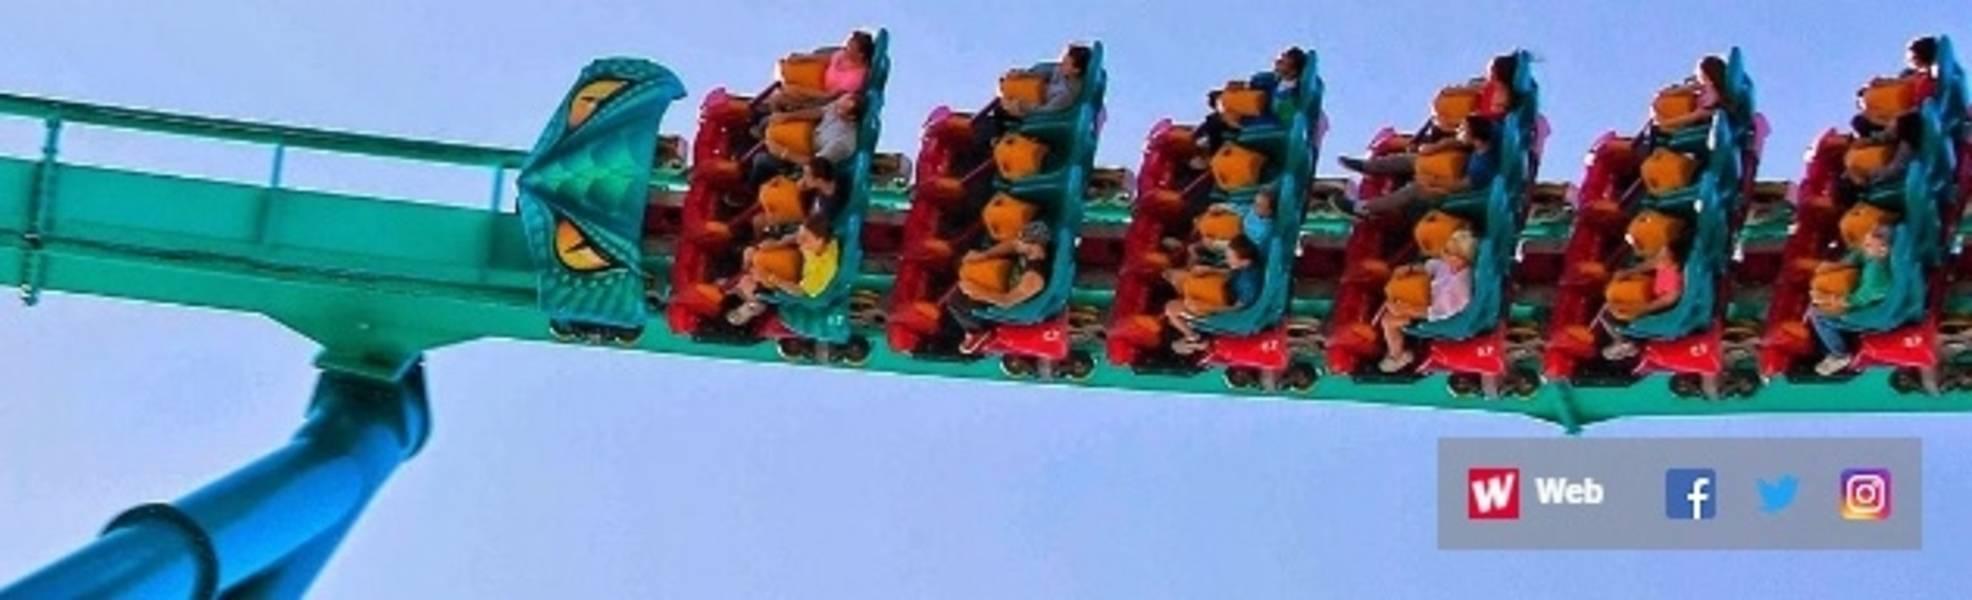 Virtual Roller Coasters15211